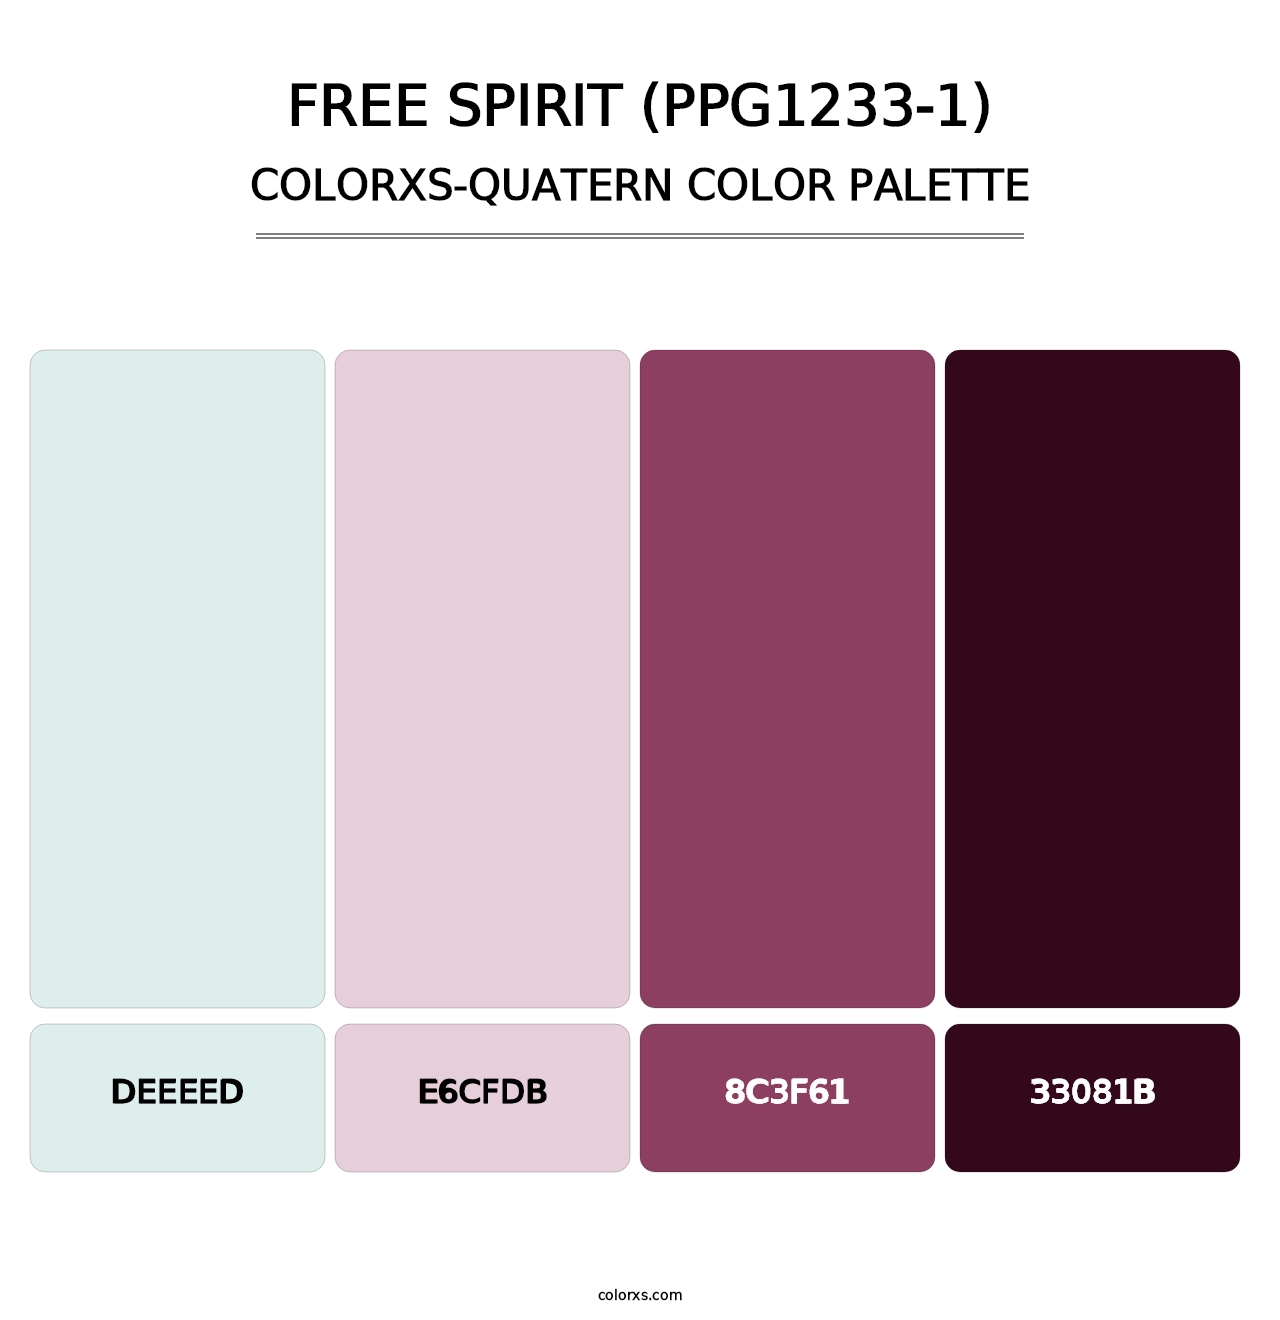 Free Spirit (PPG1233-1) - Colorxs Quatern Palette